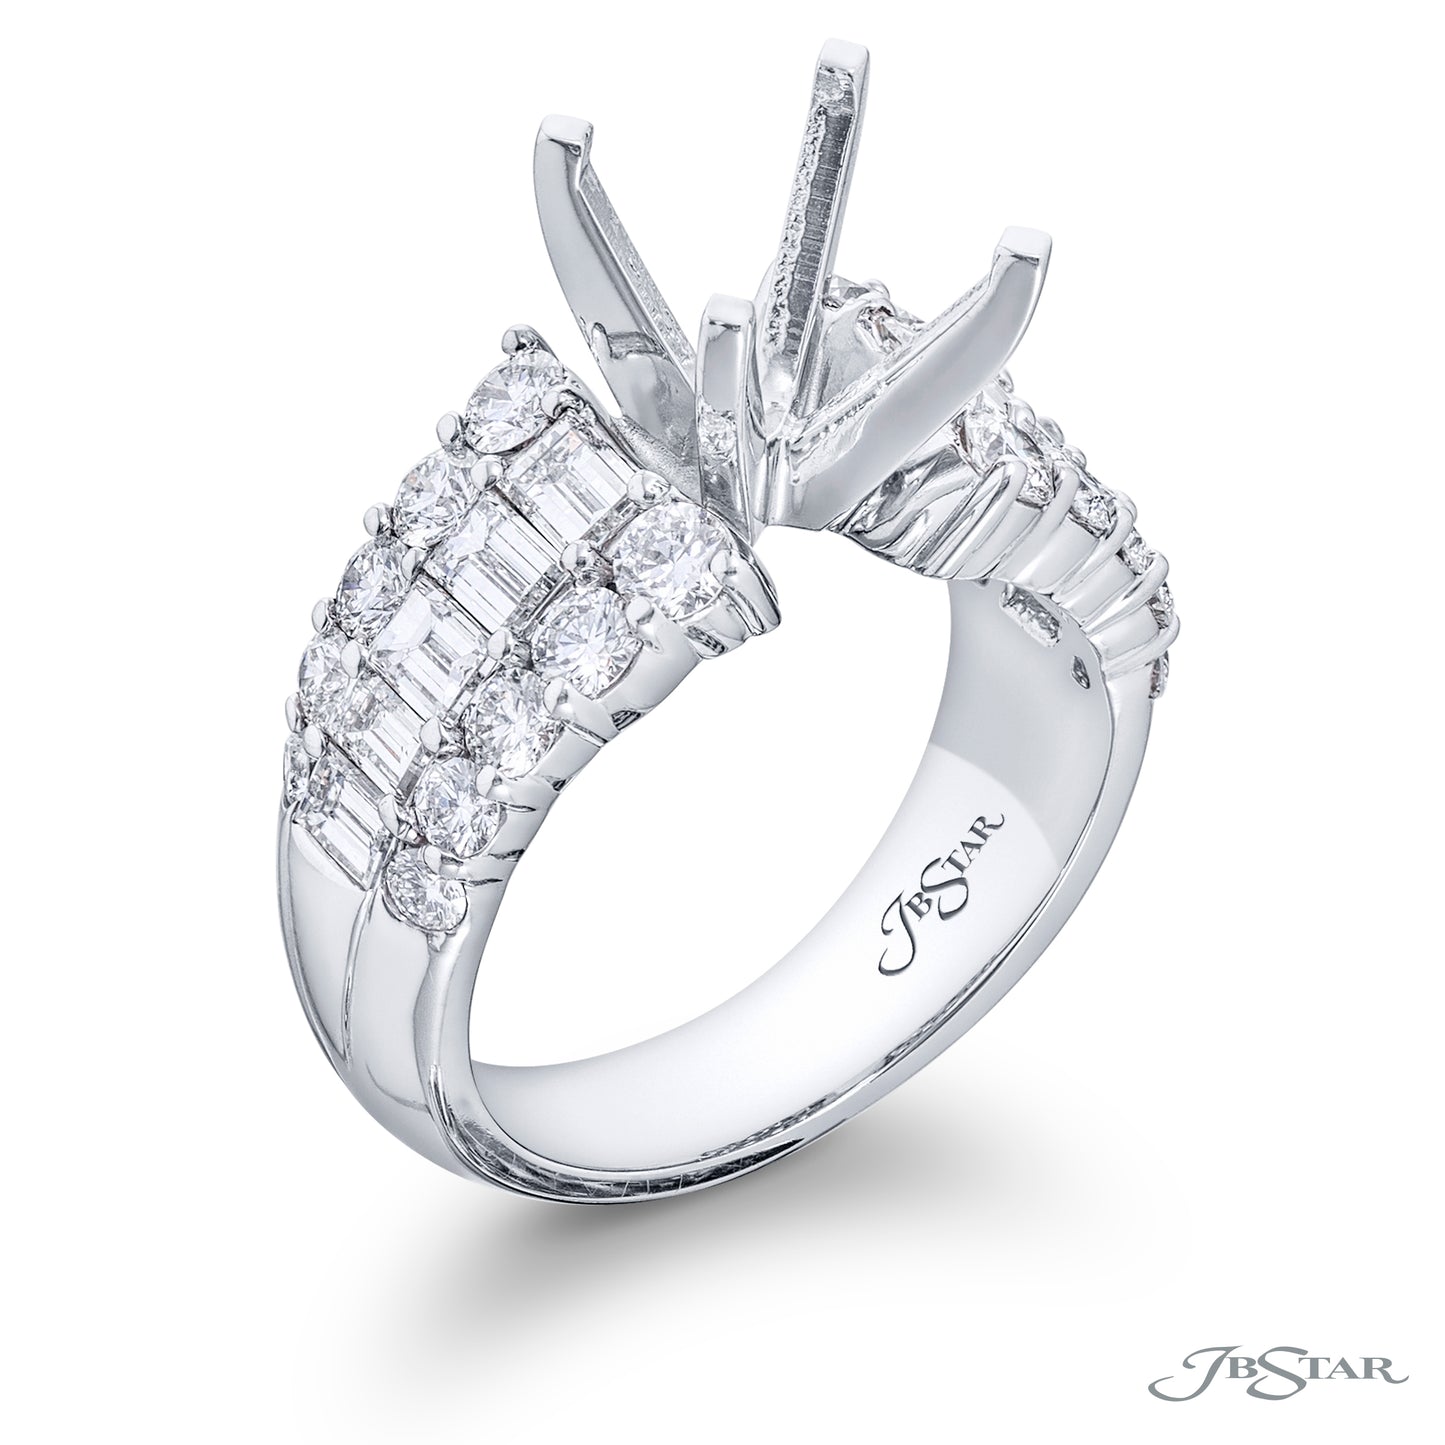 JB Star Platinum Wide Band Diamond Semi-Mount Engagement Ring